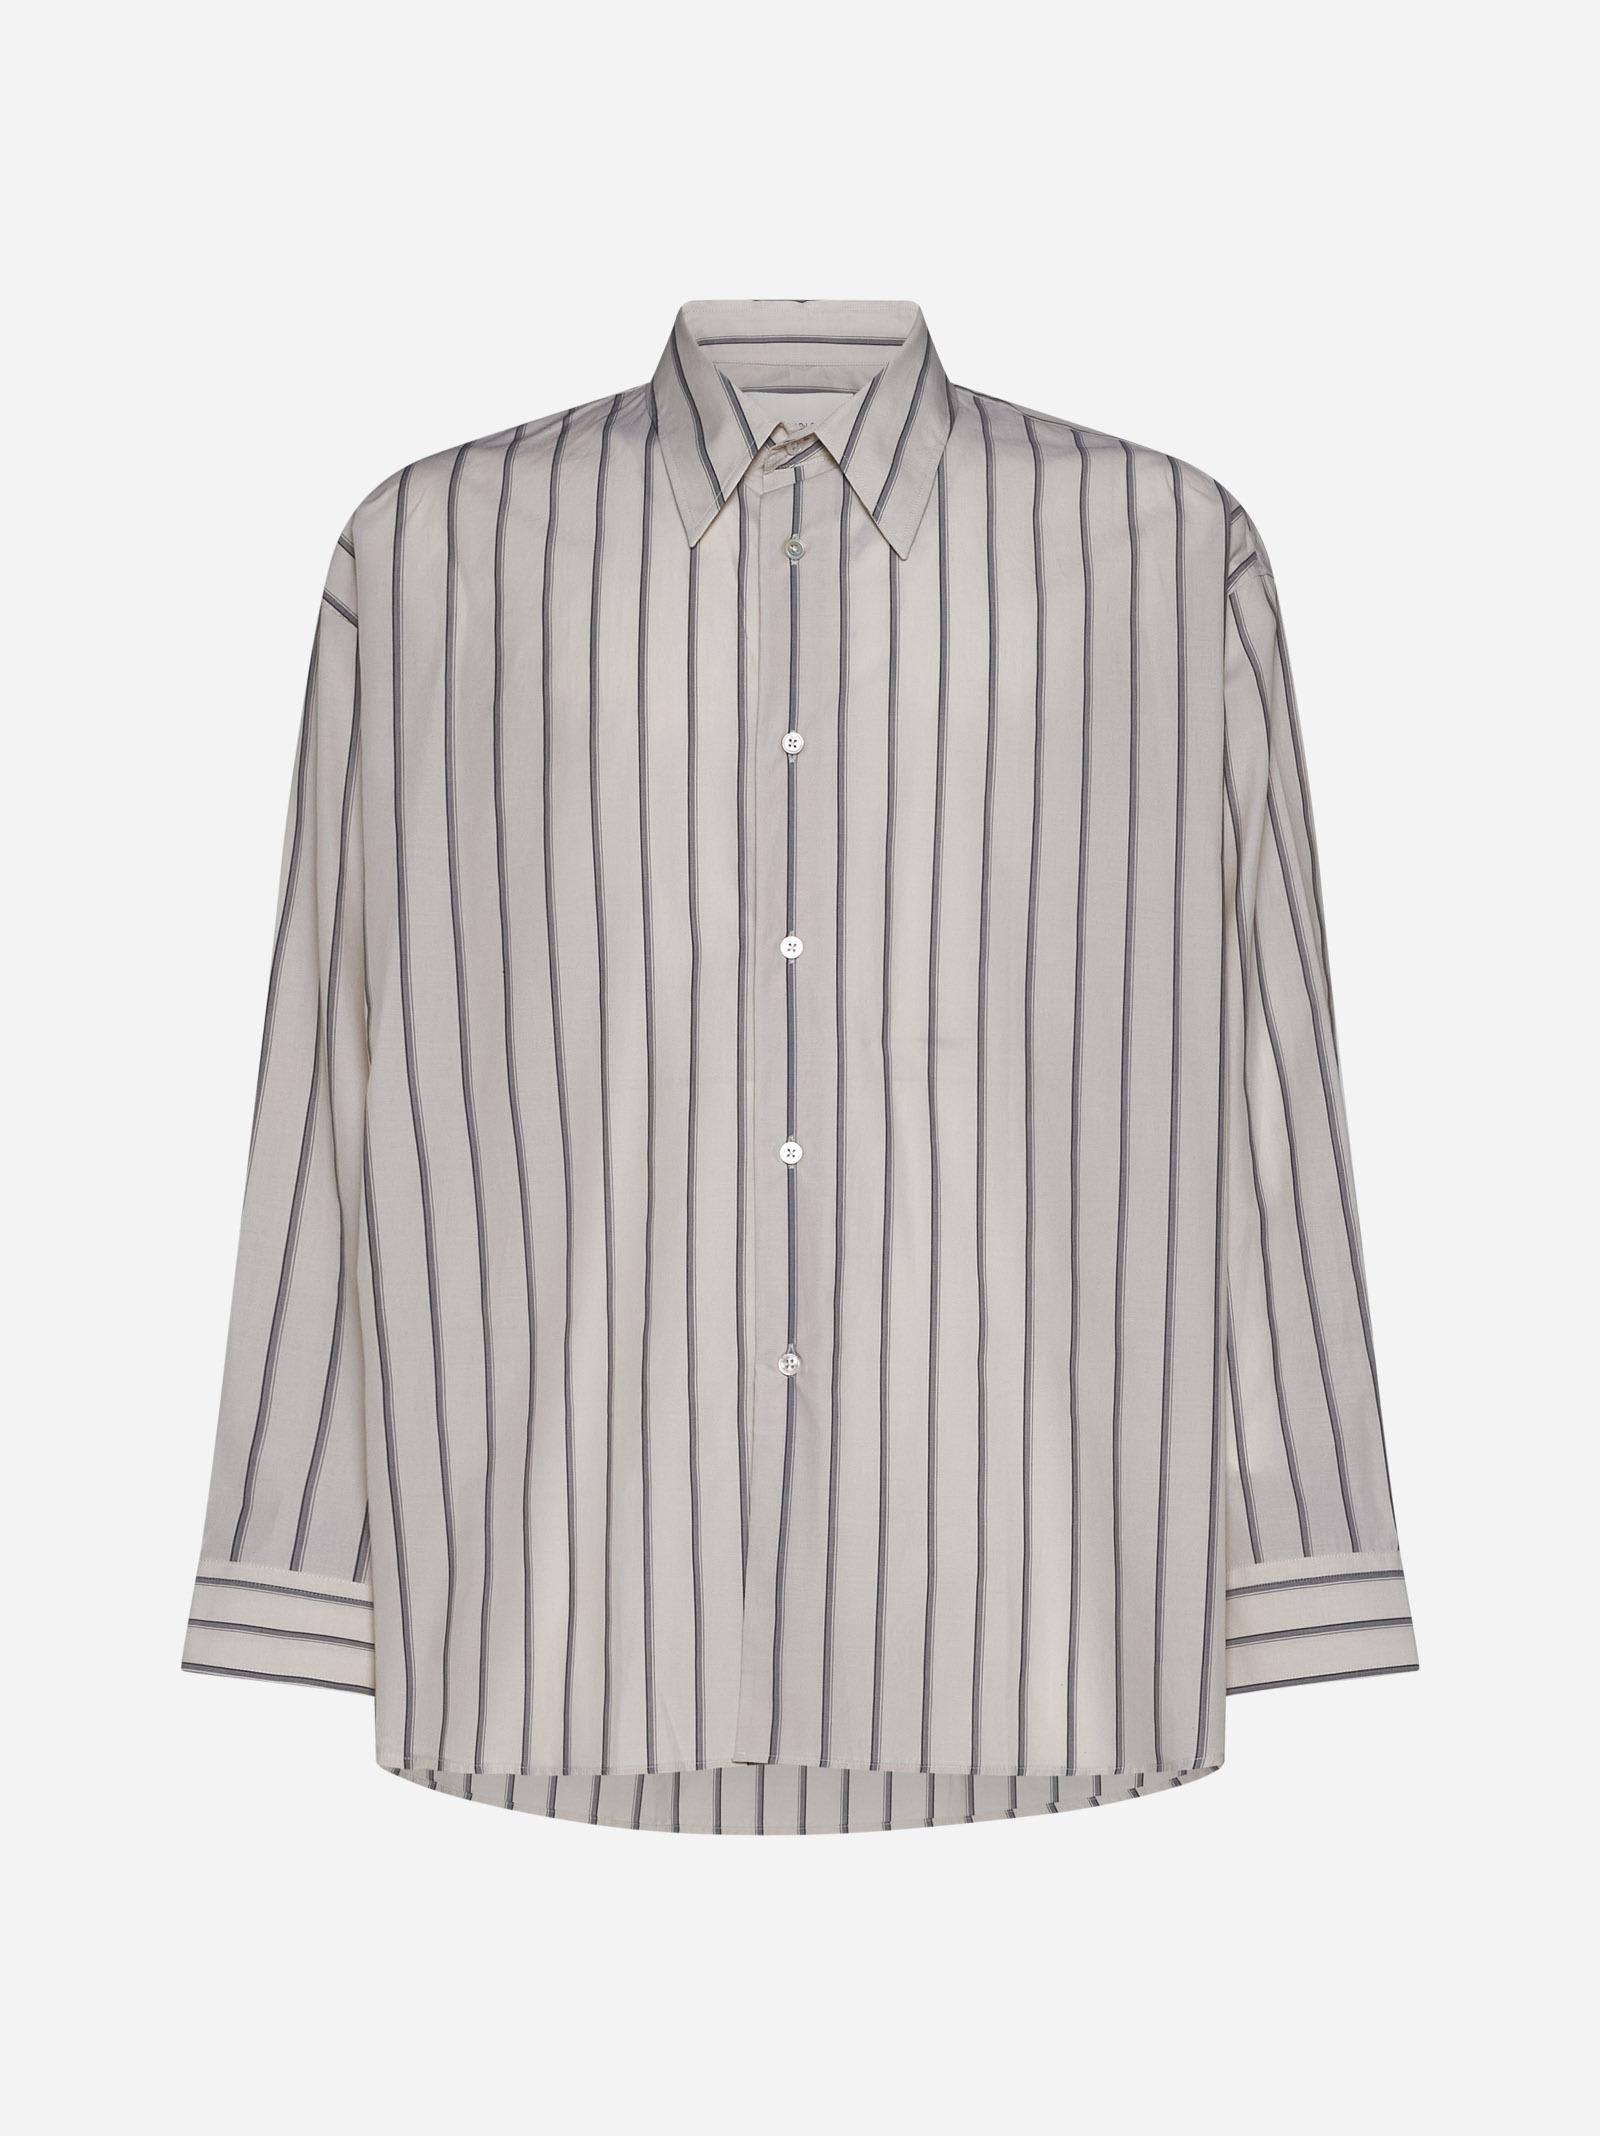 Loche Pinstriped Cotton Shirt